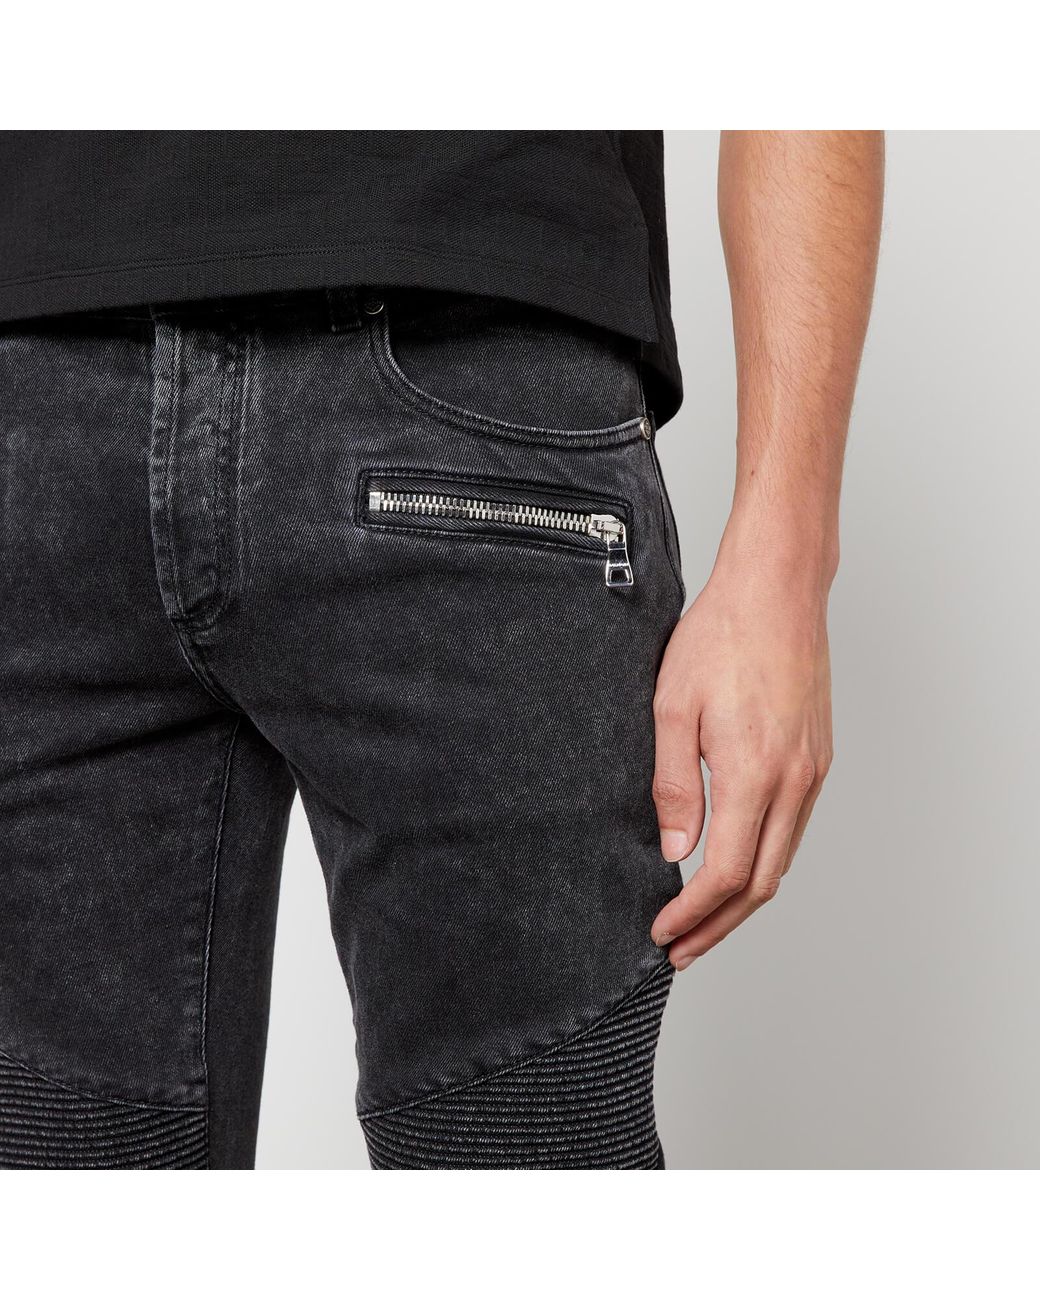 Balmain Ribbed Washed Denim Skinny Jeans in Black for Men | Lyst